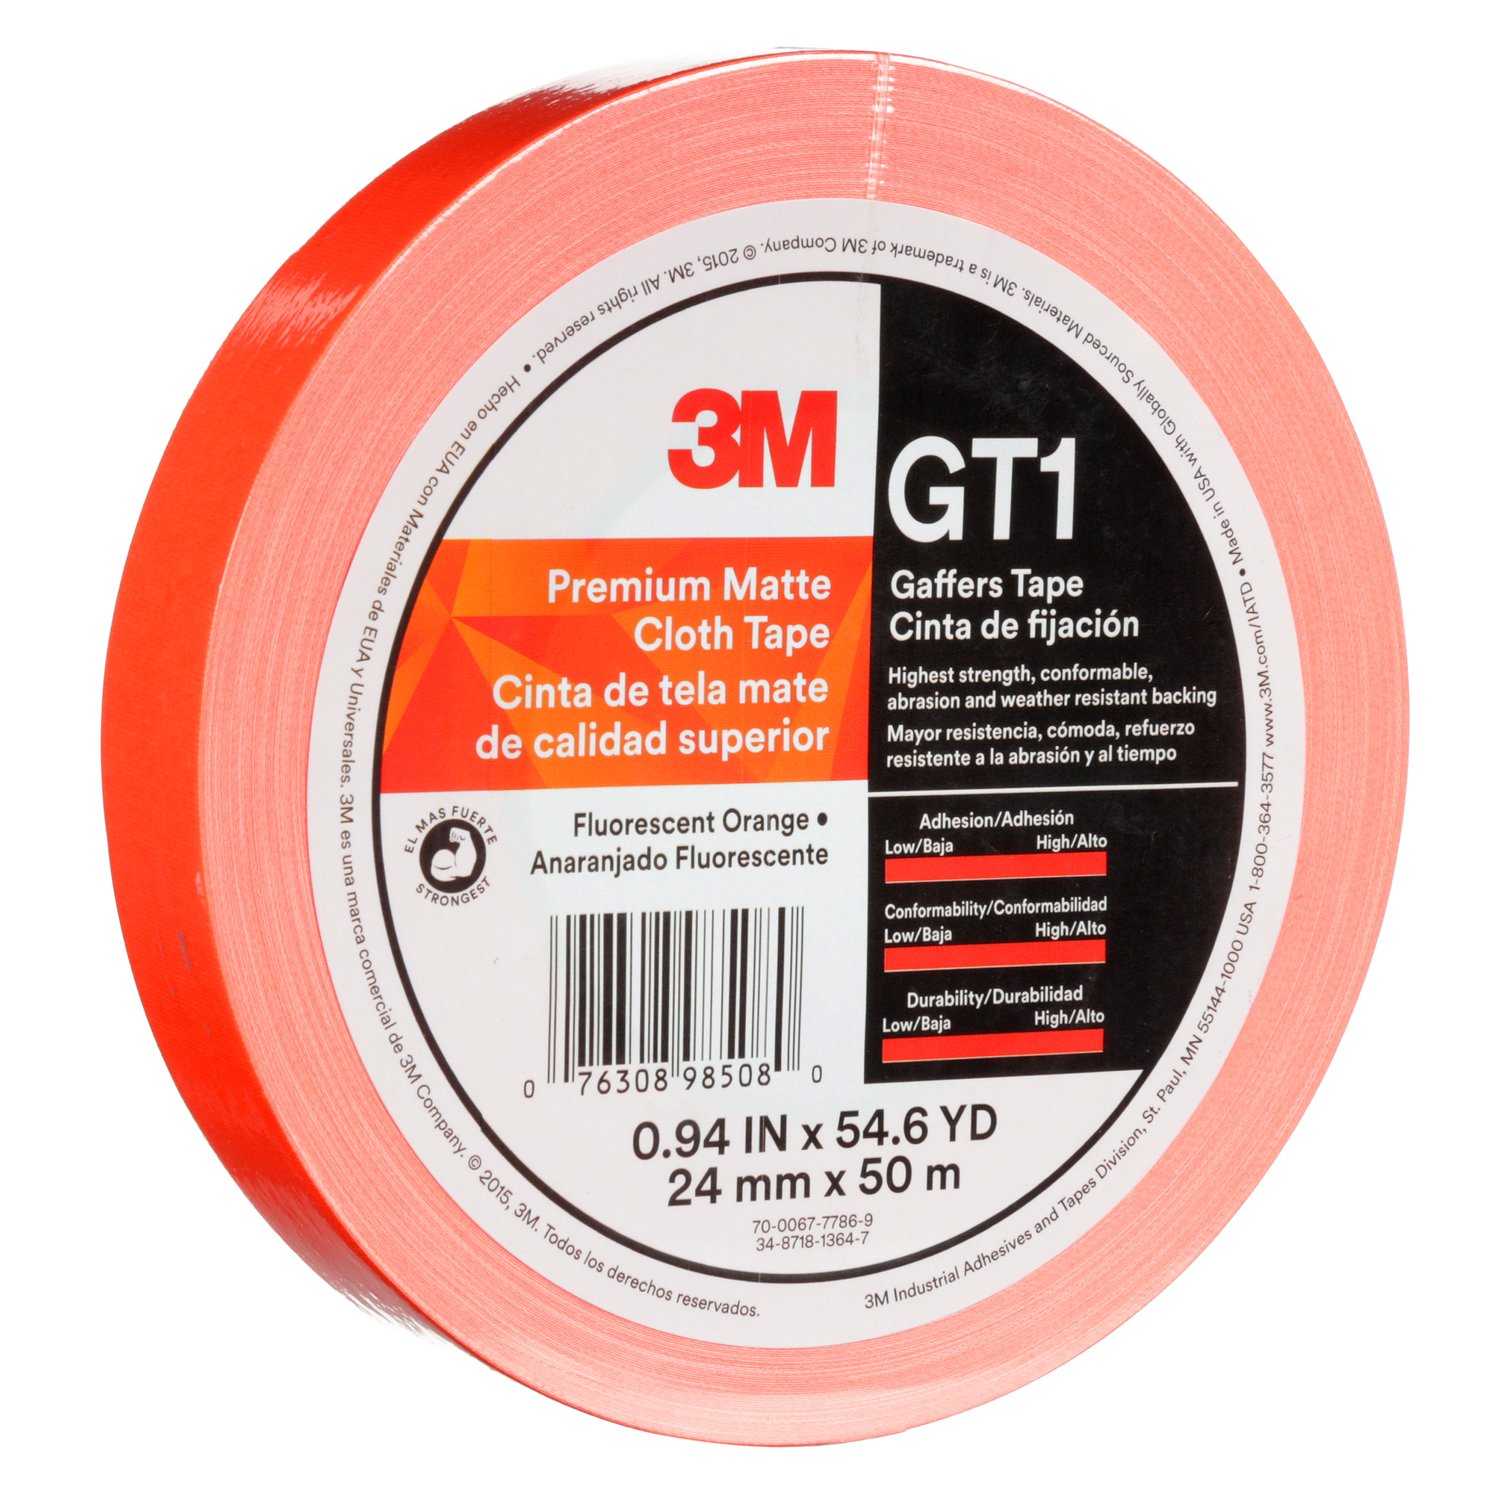 7010376459 - 3M Premium Matte Cloth (Gaffers) Tape GT1, Fluorescent Orange, 24 mm x
50 m, 11 mil, 48/Case